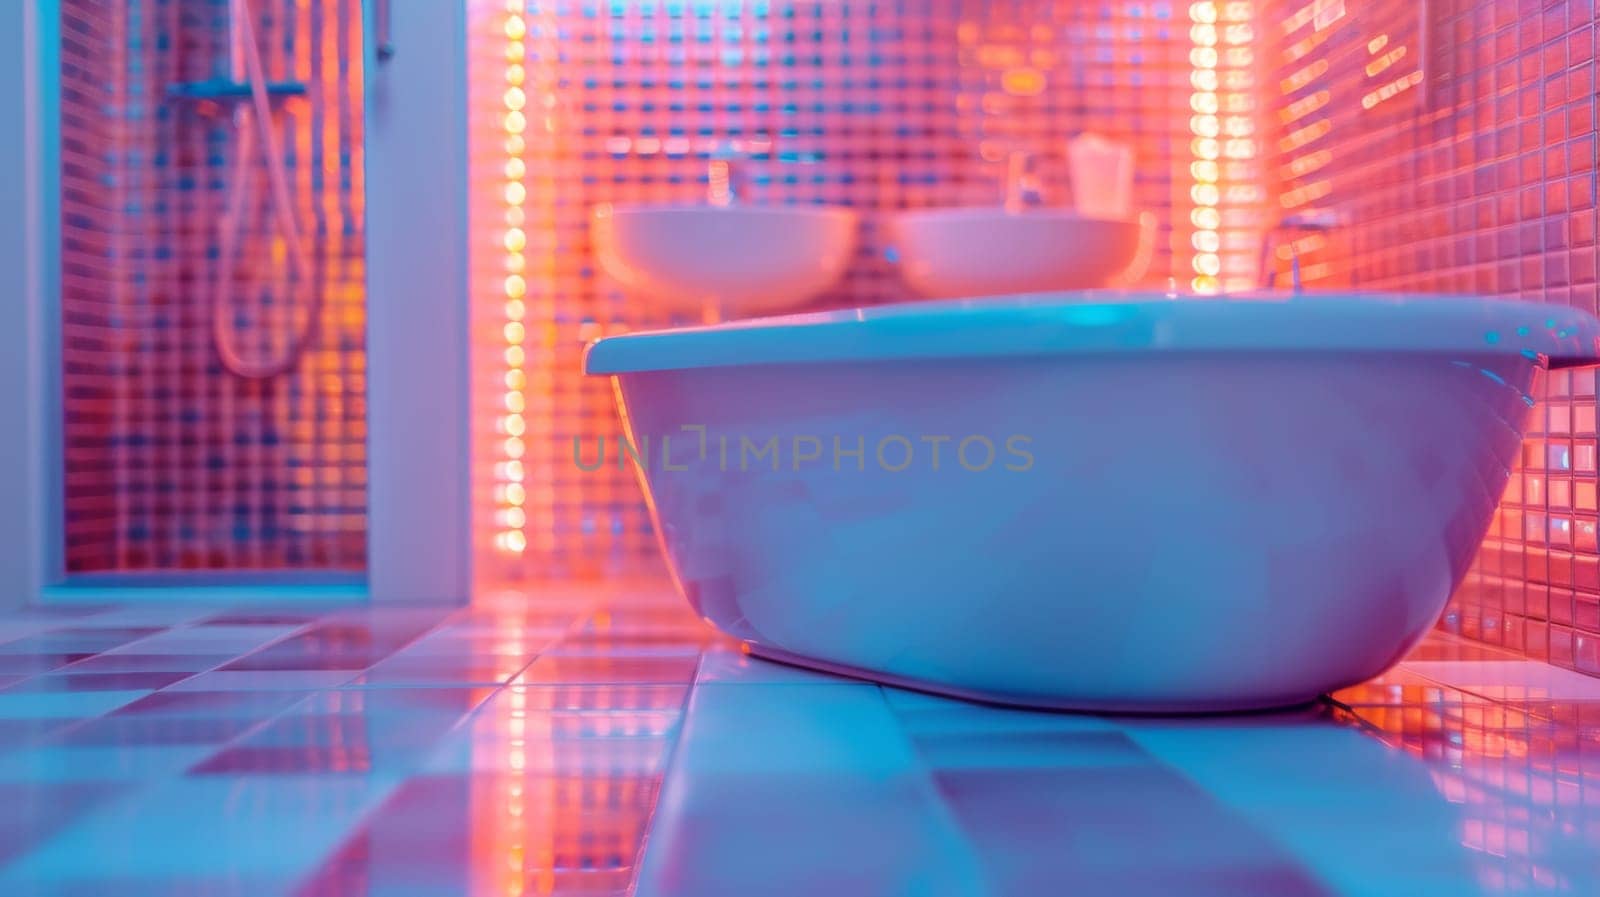 A bathtub sitting in a bathroom with lights on the wall